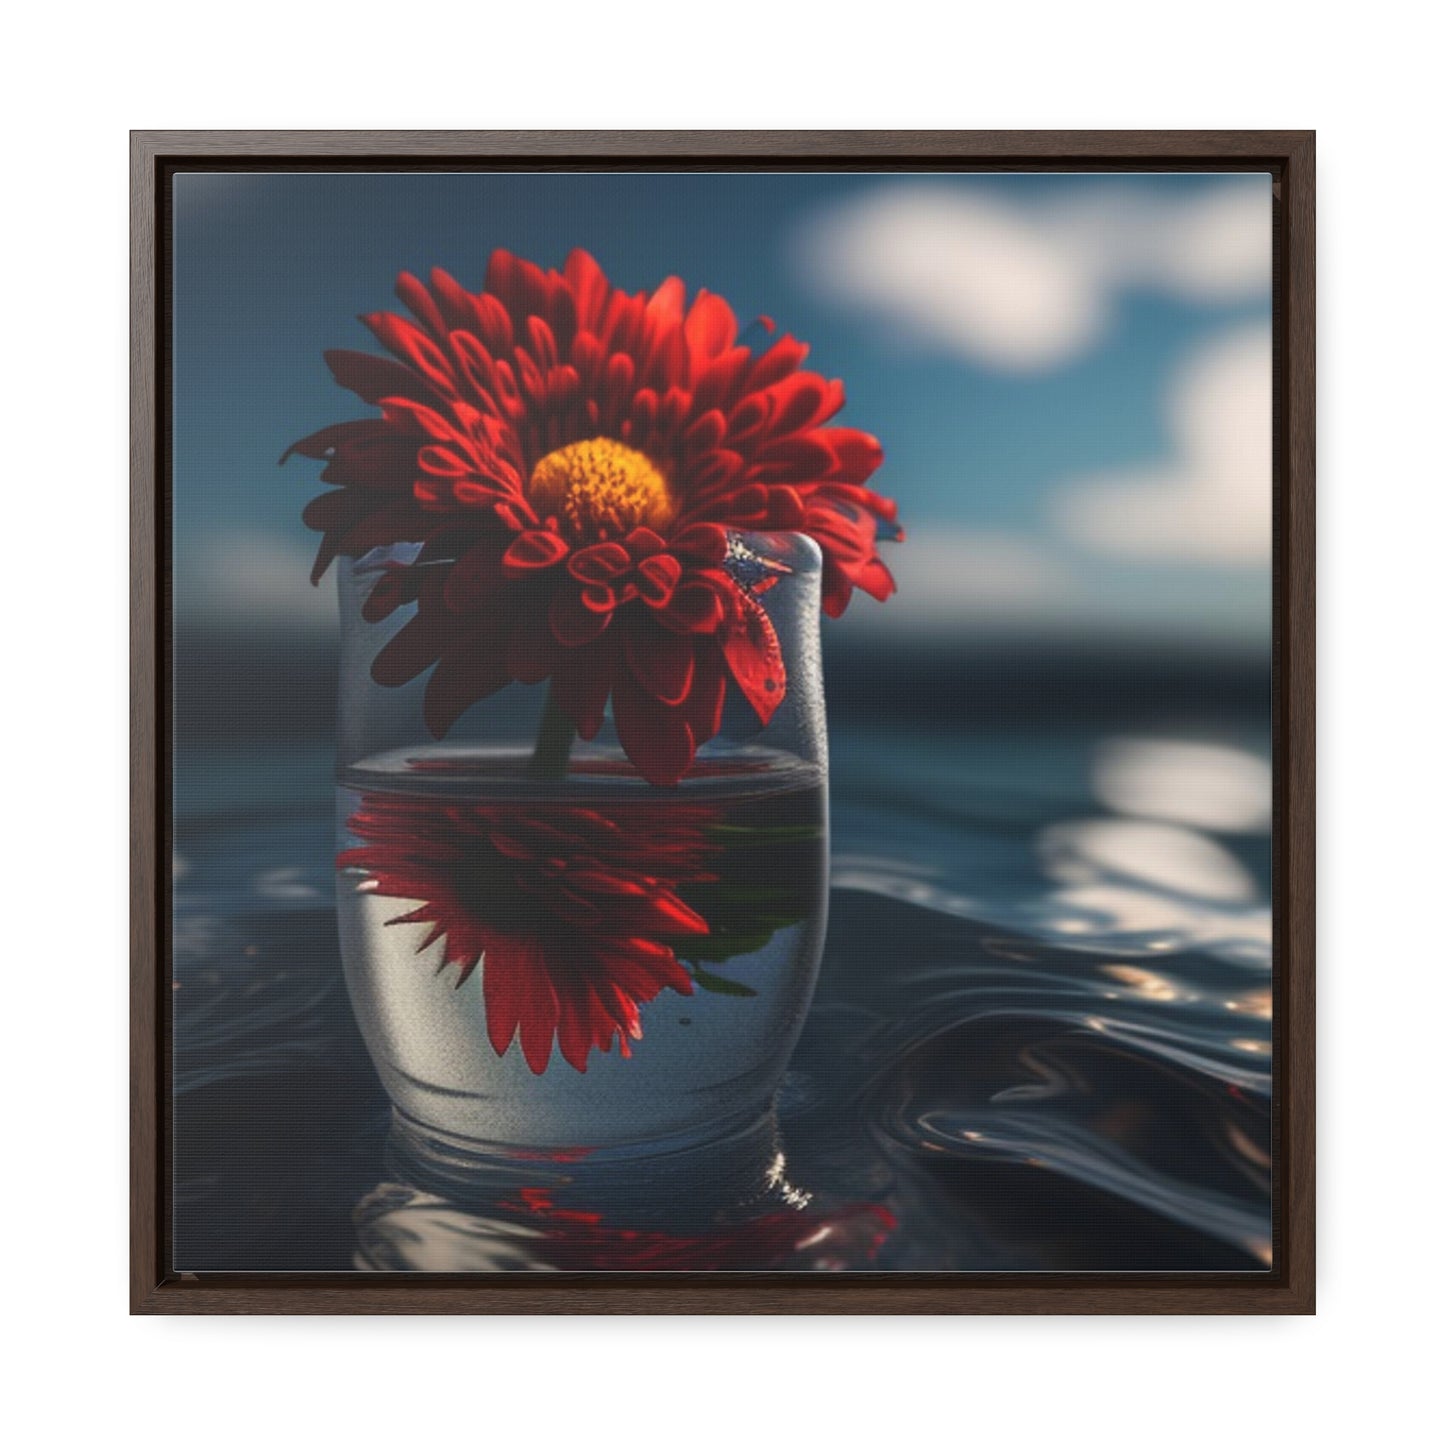 Gallery Canvas Wraps, Square Frame Chrysanthemum 3